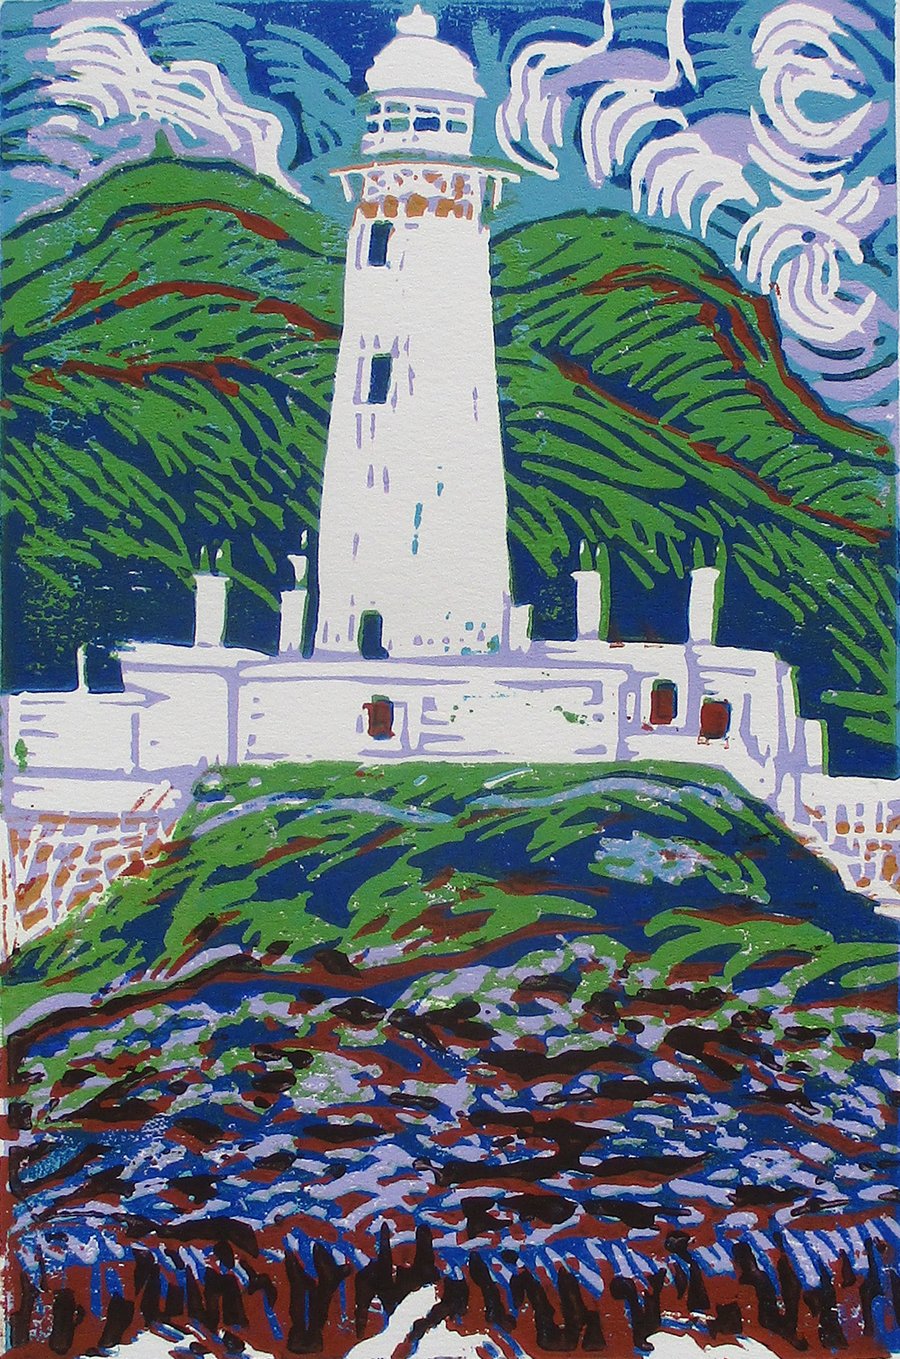 Lismore Lighthouse, Scotland - Original Hand Pressed Linocut Print Ltd Edition